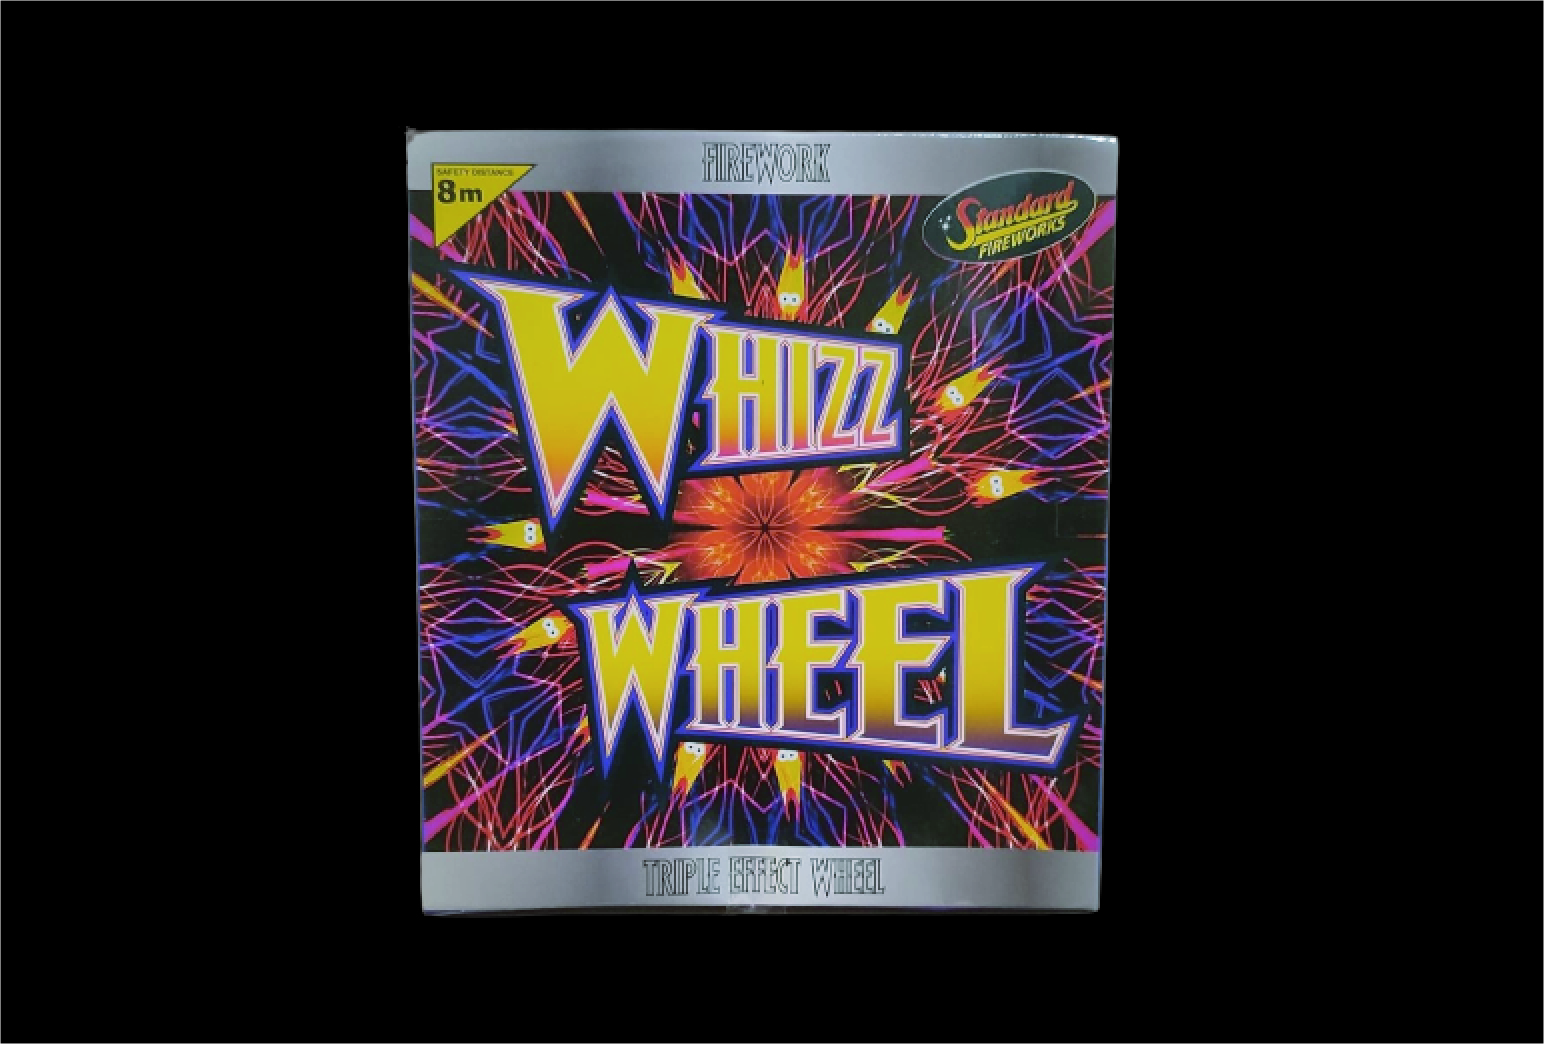 Whizz Wheel